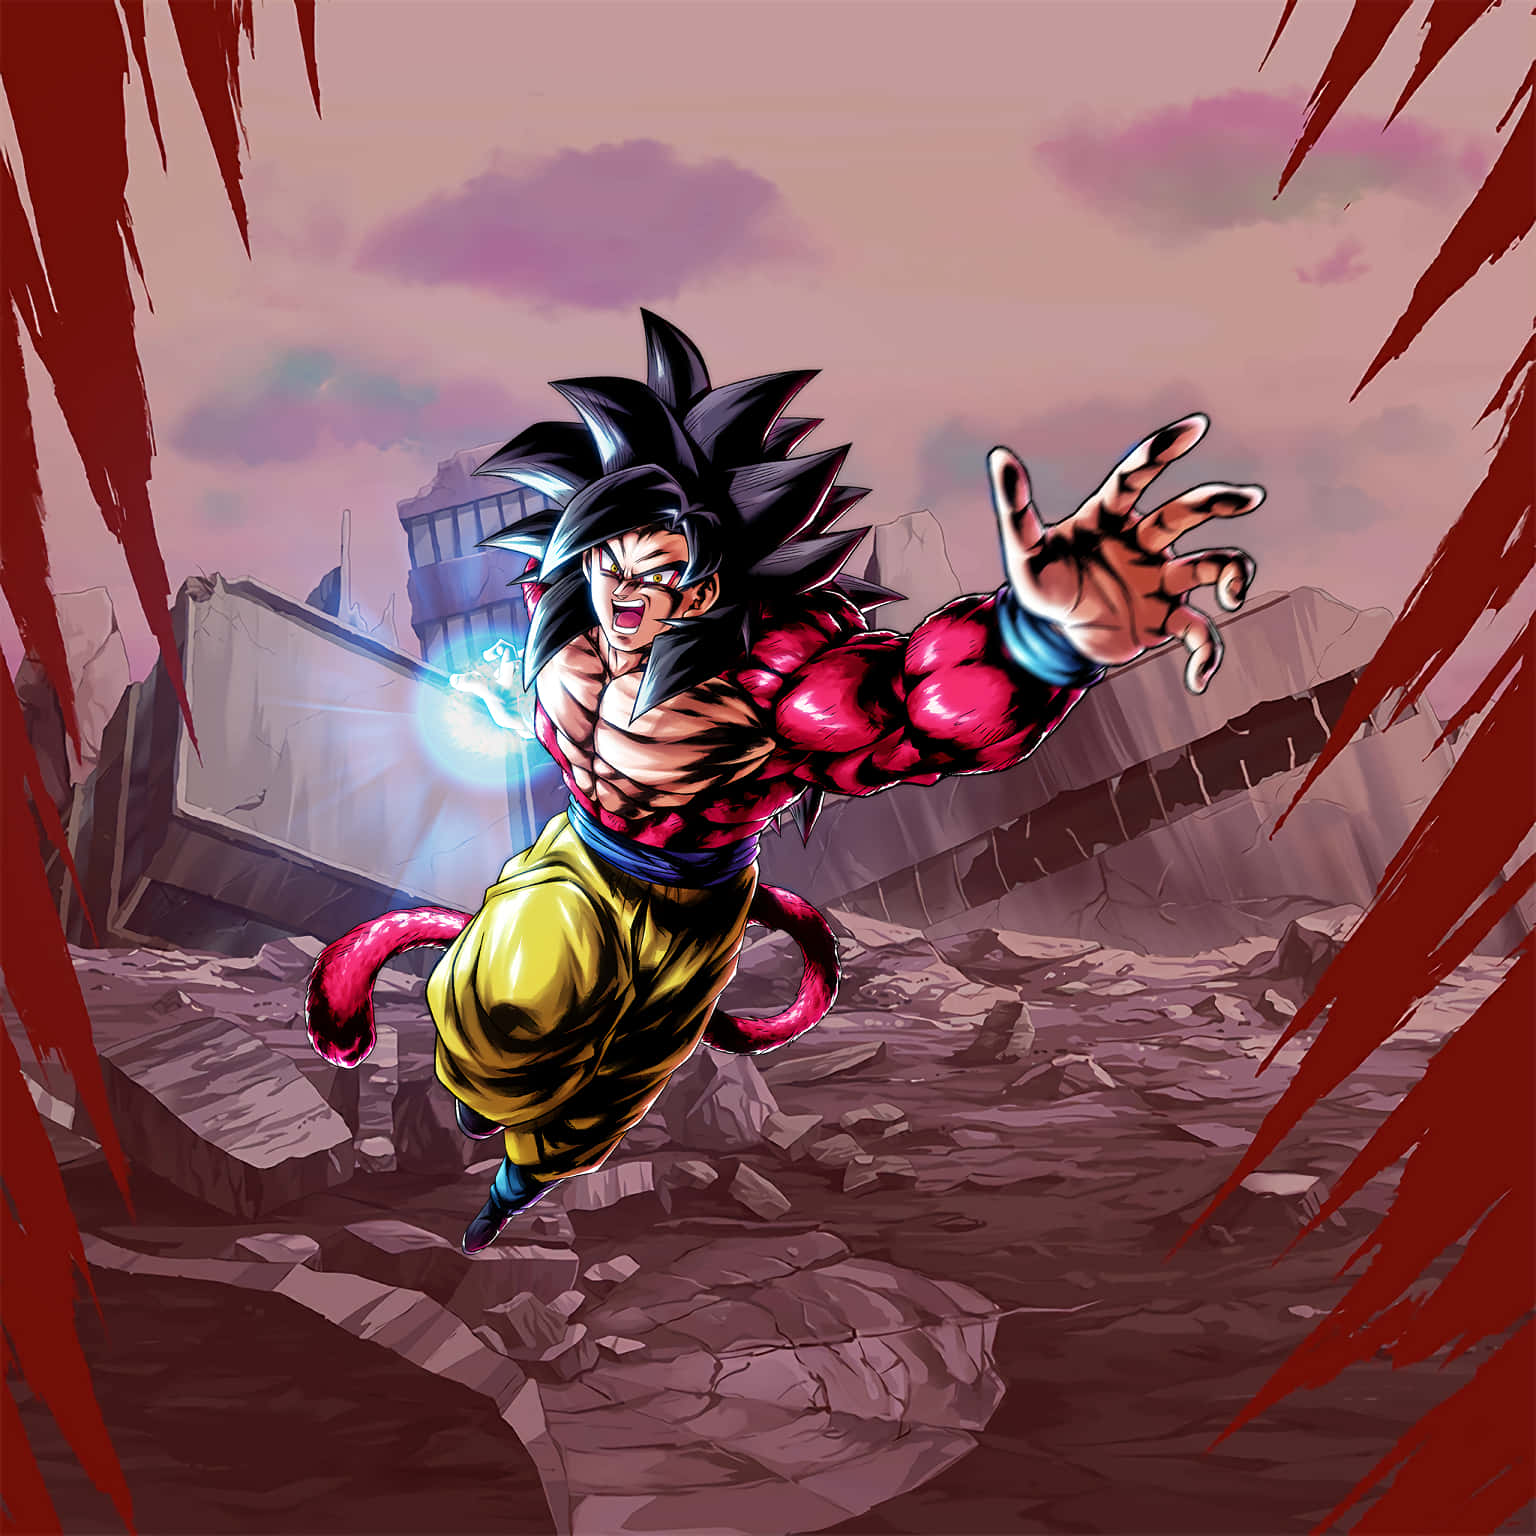 Goku, the Super Saiyan Hero, Unleashes His Power in Super Saiyan 4 Wallpaper